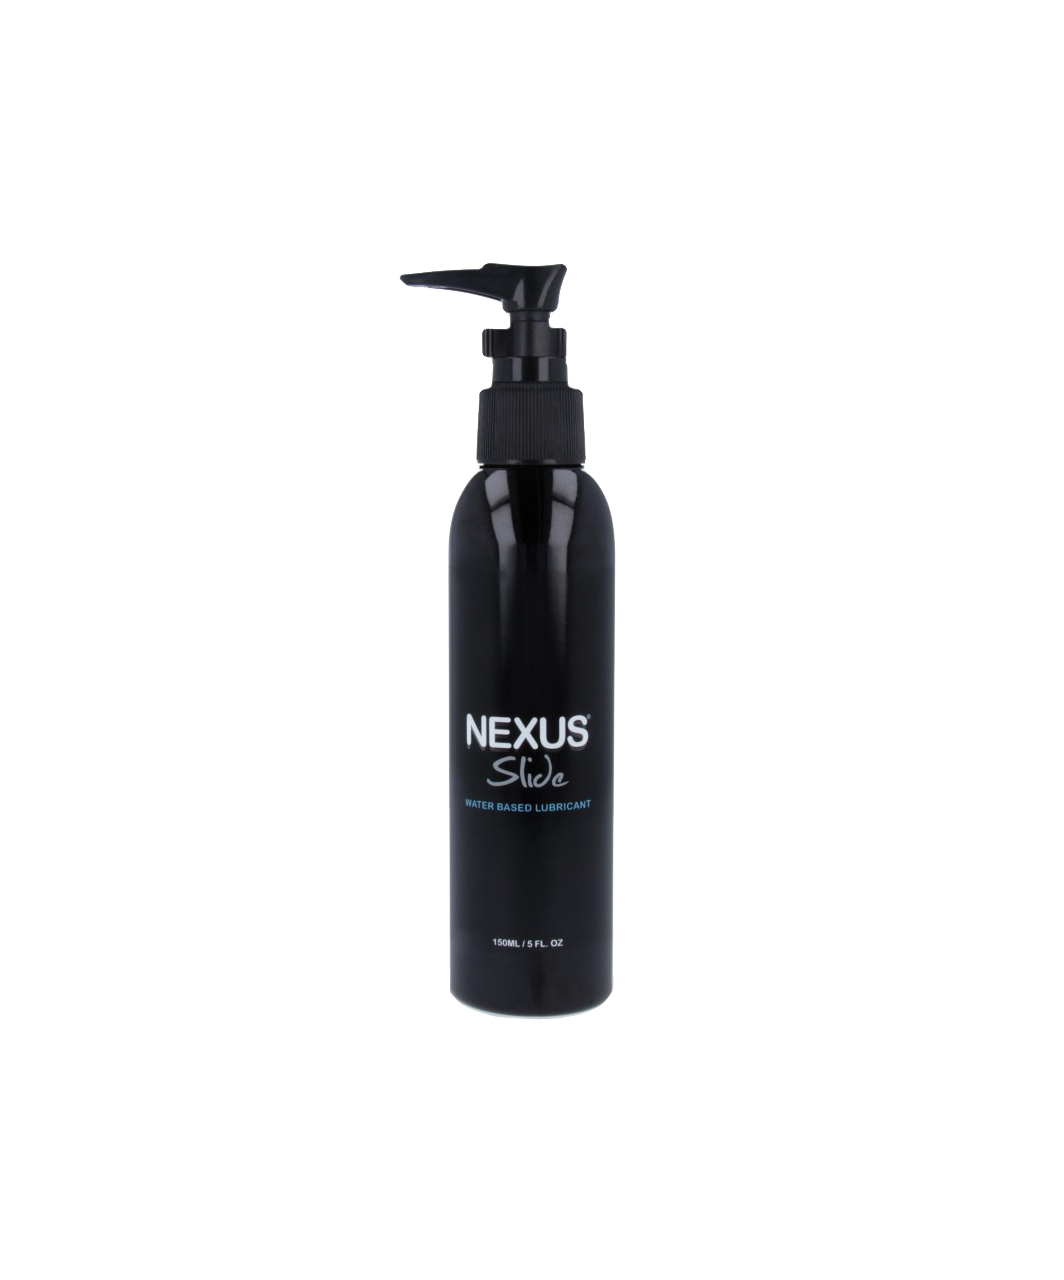 Nexus Slide (150 ml)